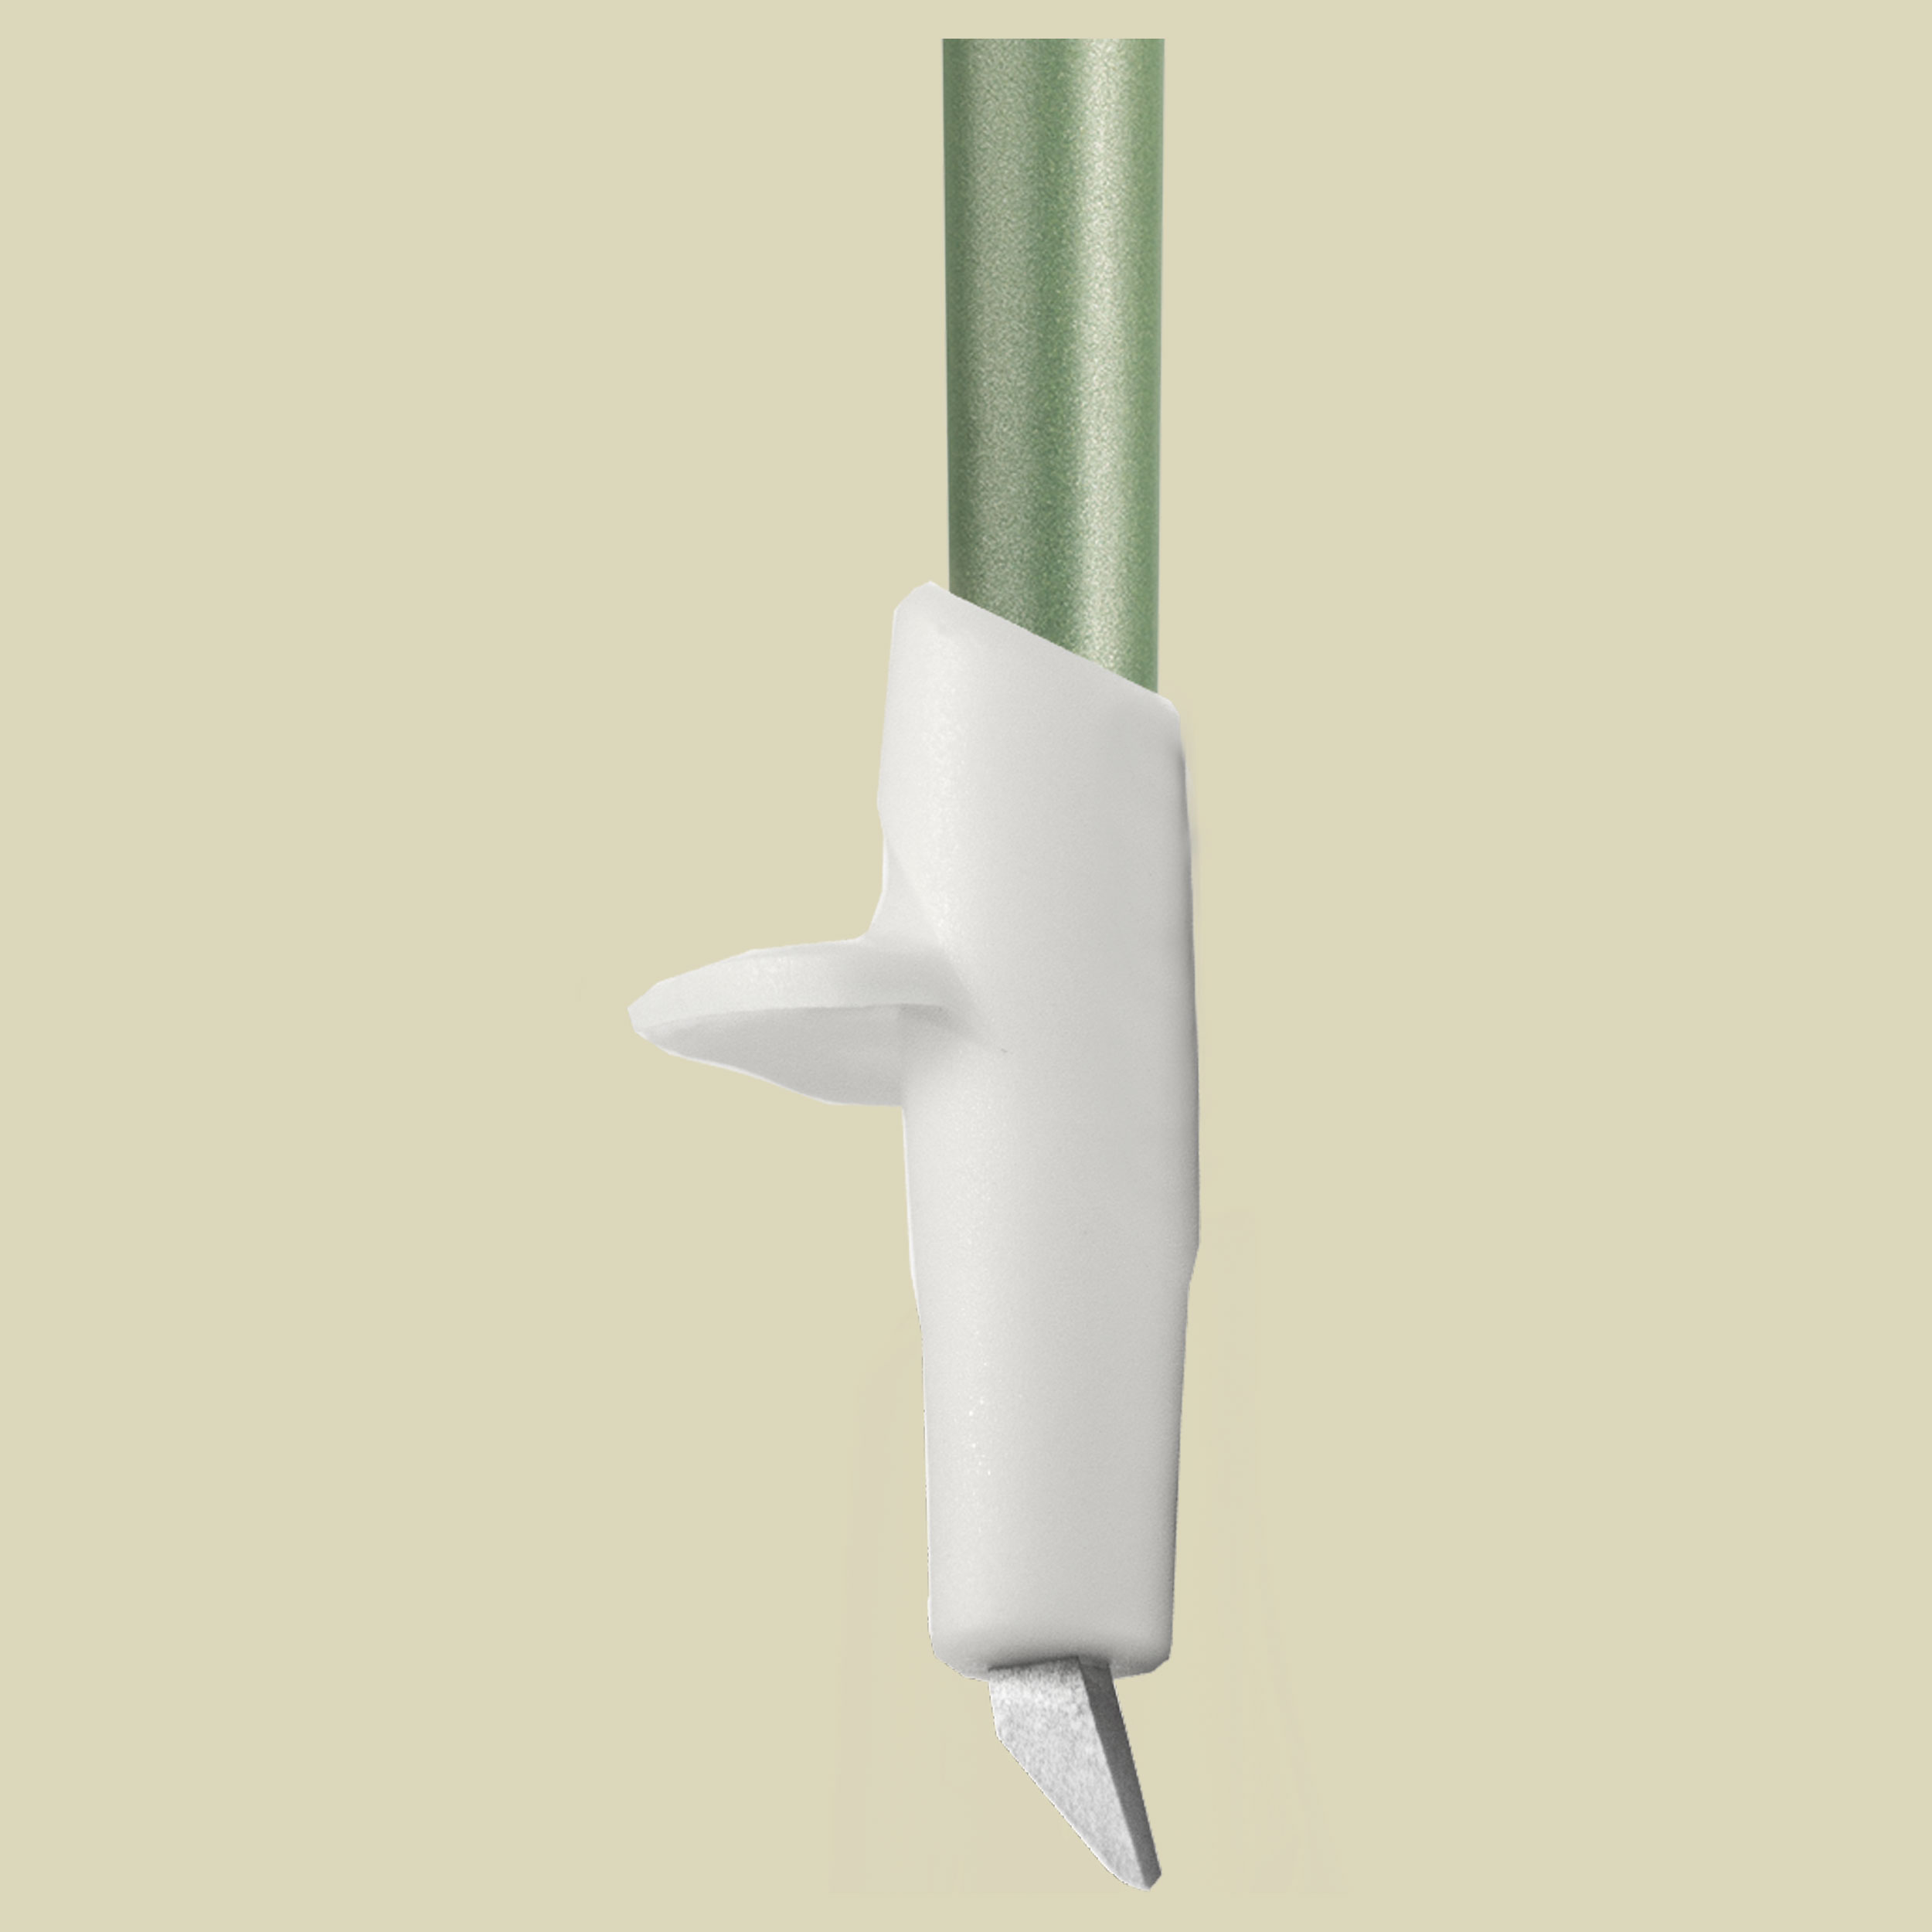 Passion Länge 105 cm Farbe smokegreen-white-dark anthracite